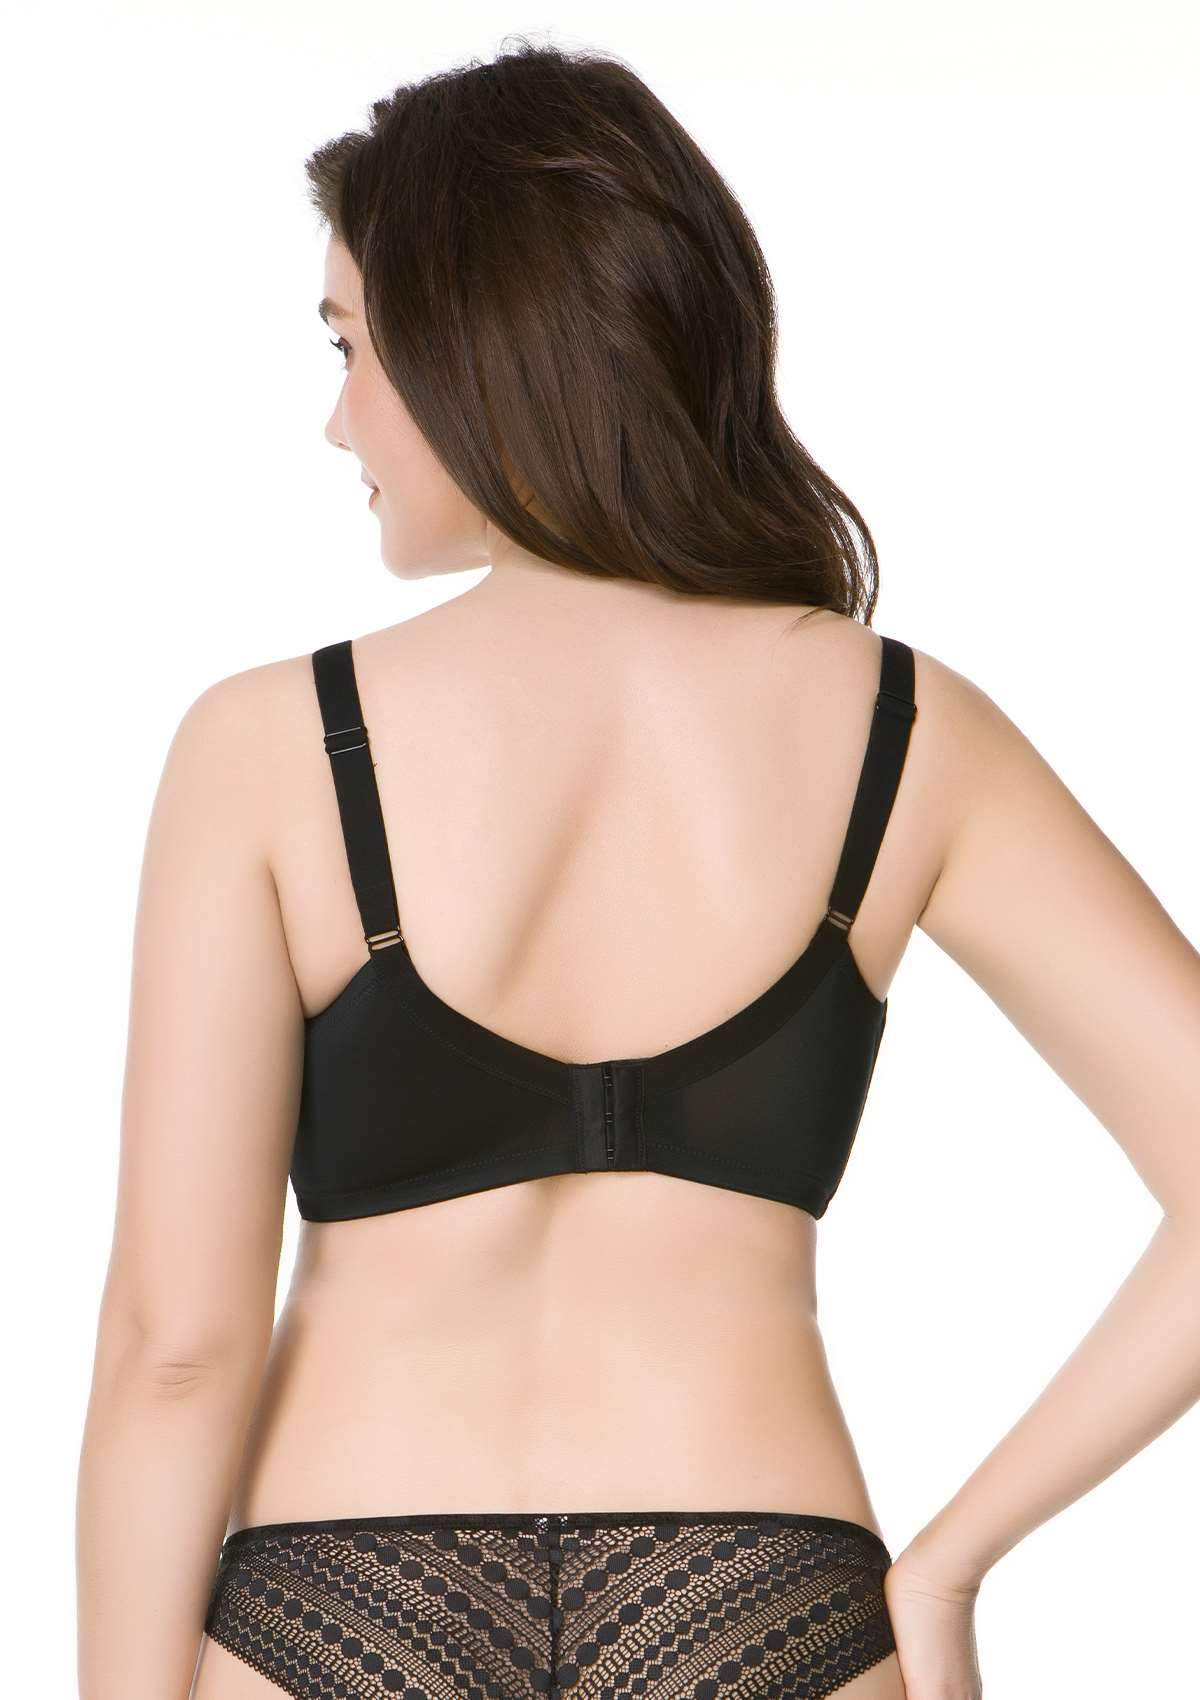 HSIA Heroine Matching Bra And Panties: Unlined Lace Unpadded Bra - Black / 44 / C